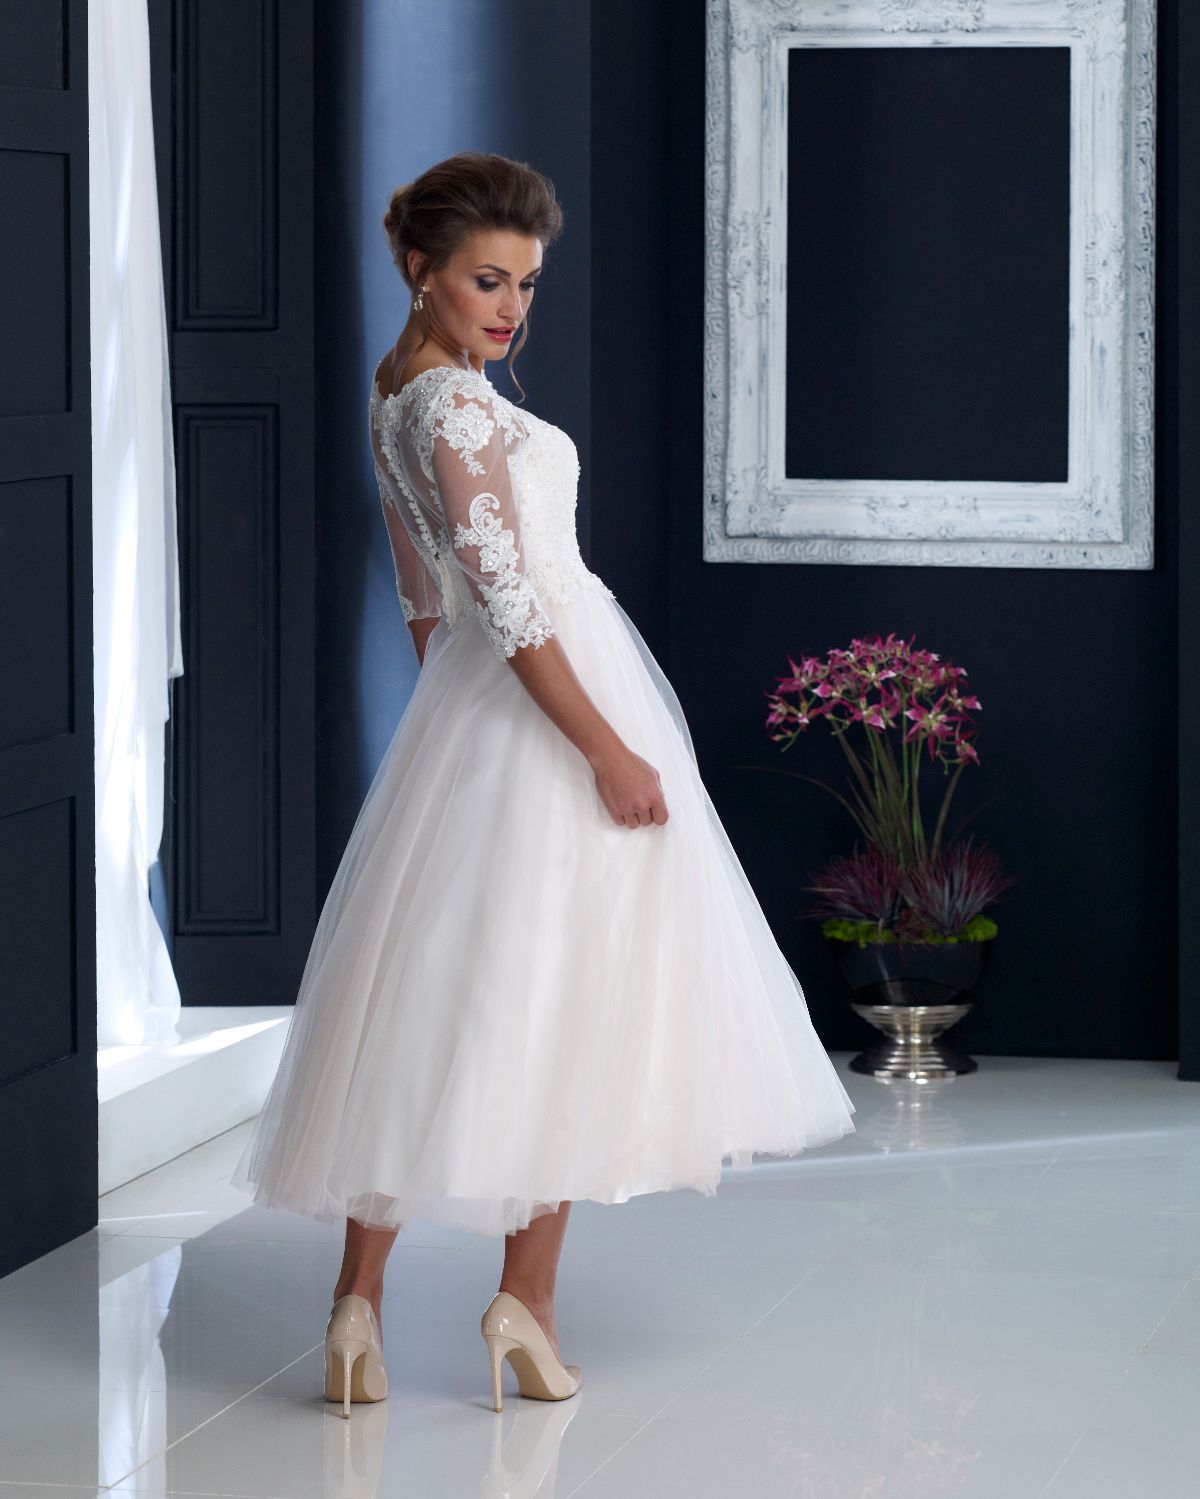 Best Dress 2 Impress Bridal-Image-87